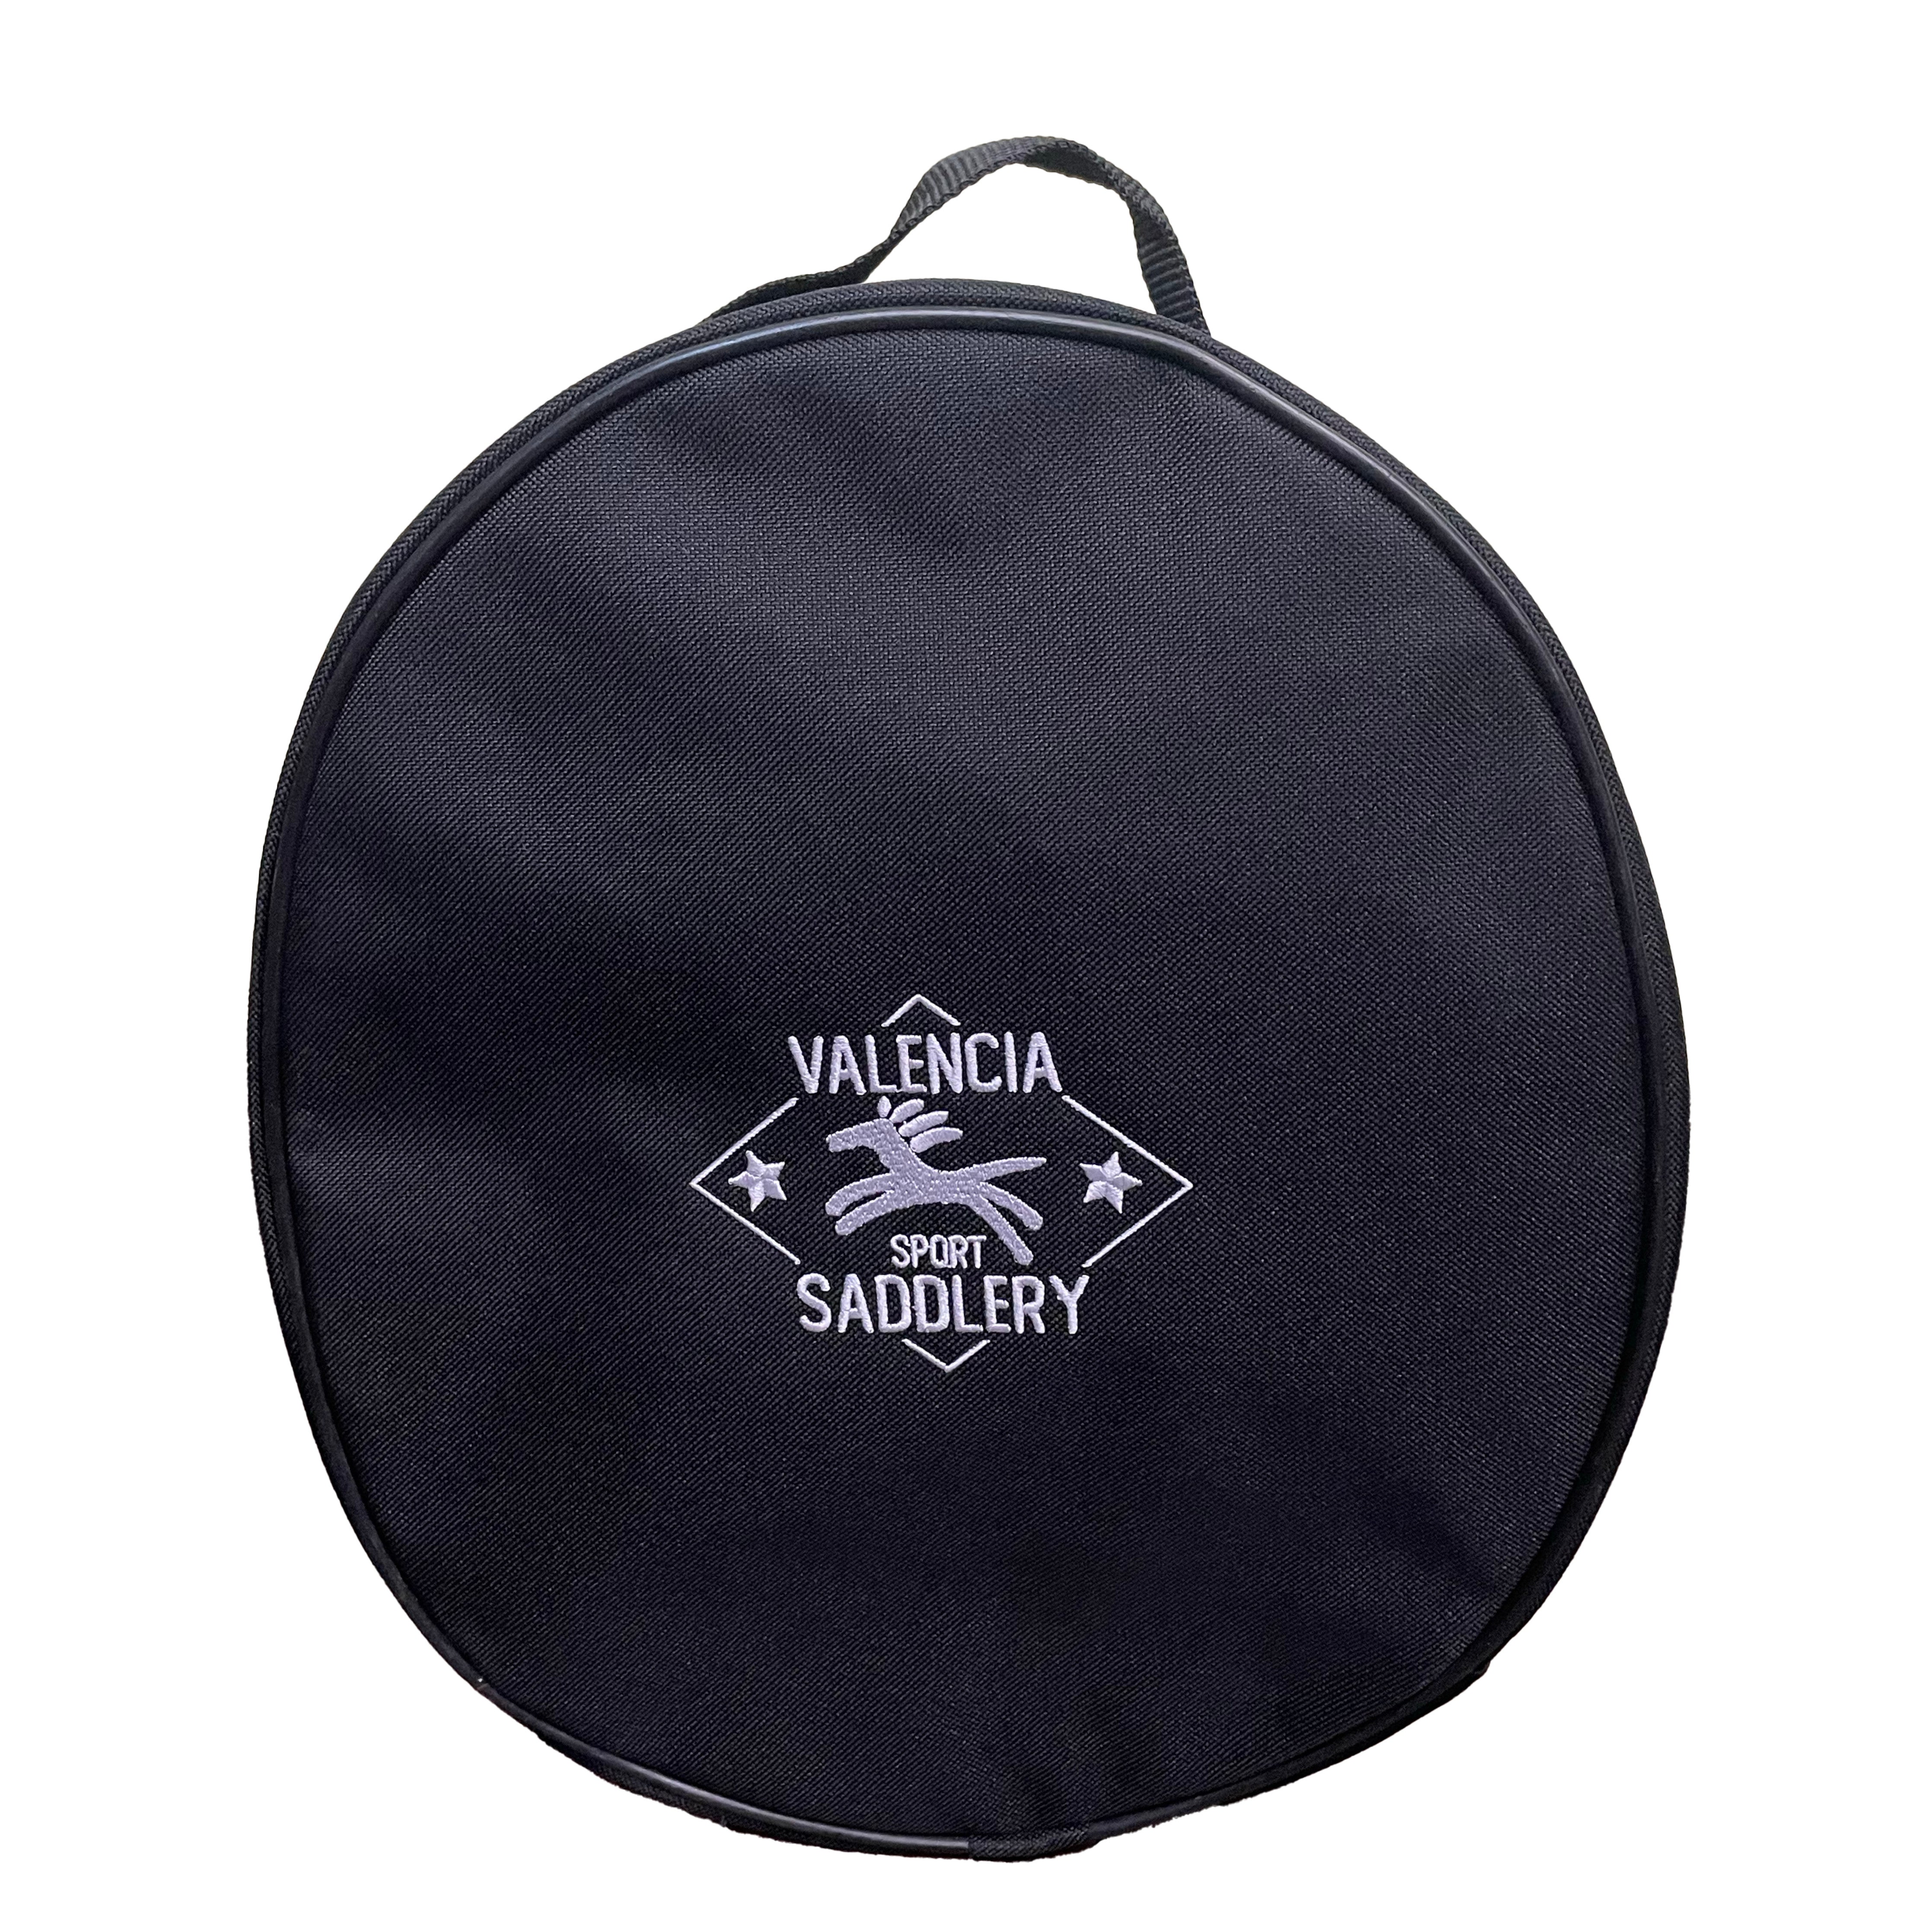 VSS Helmet Bag - Black Nylon w/ pocket